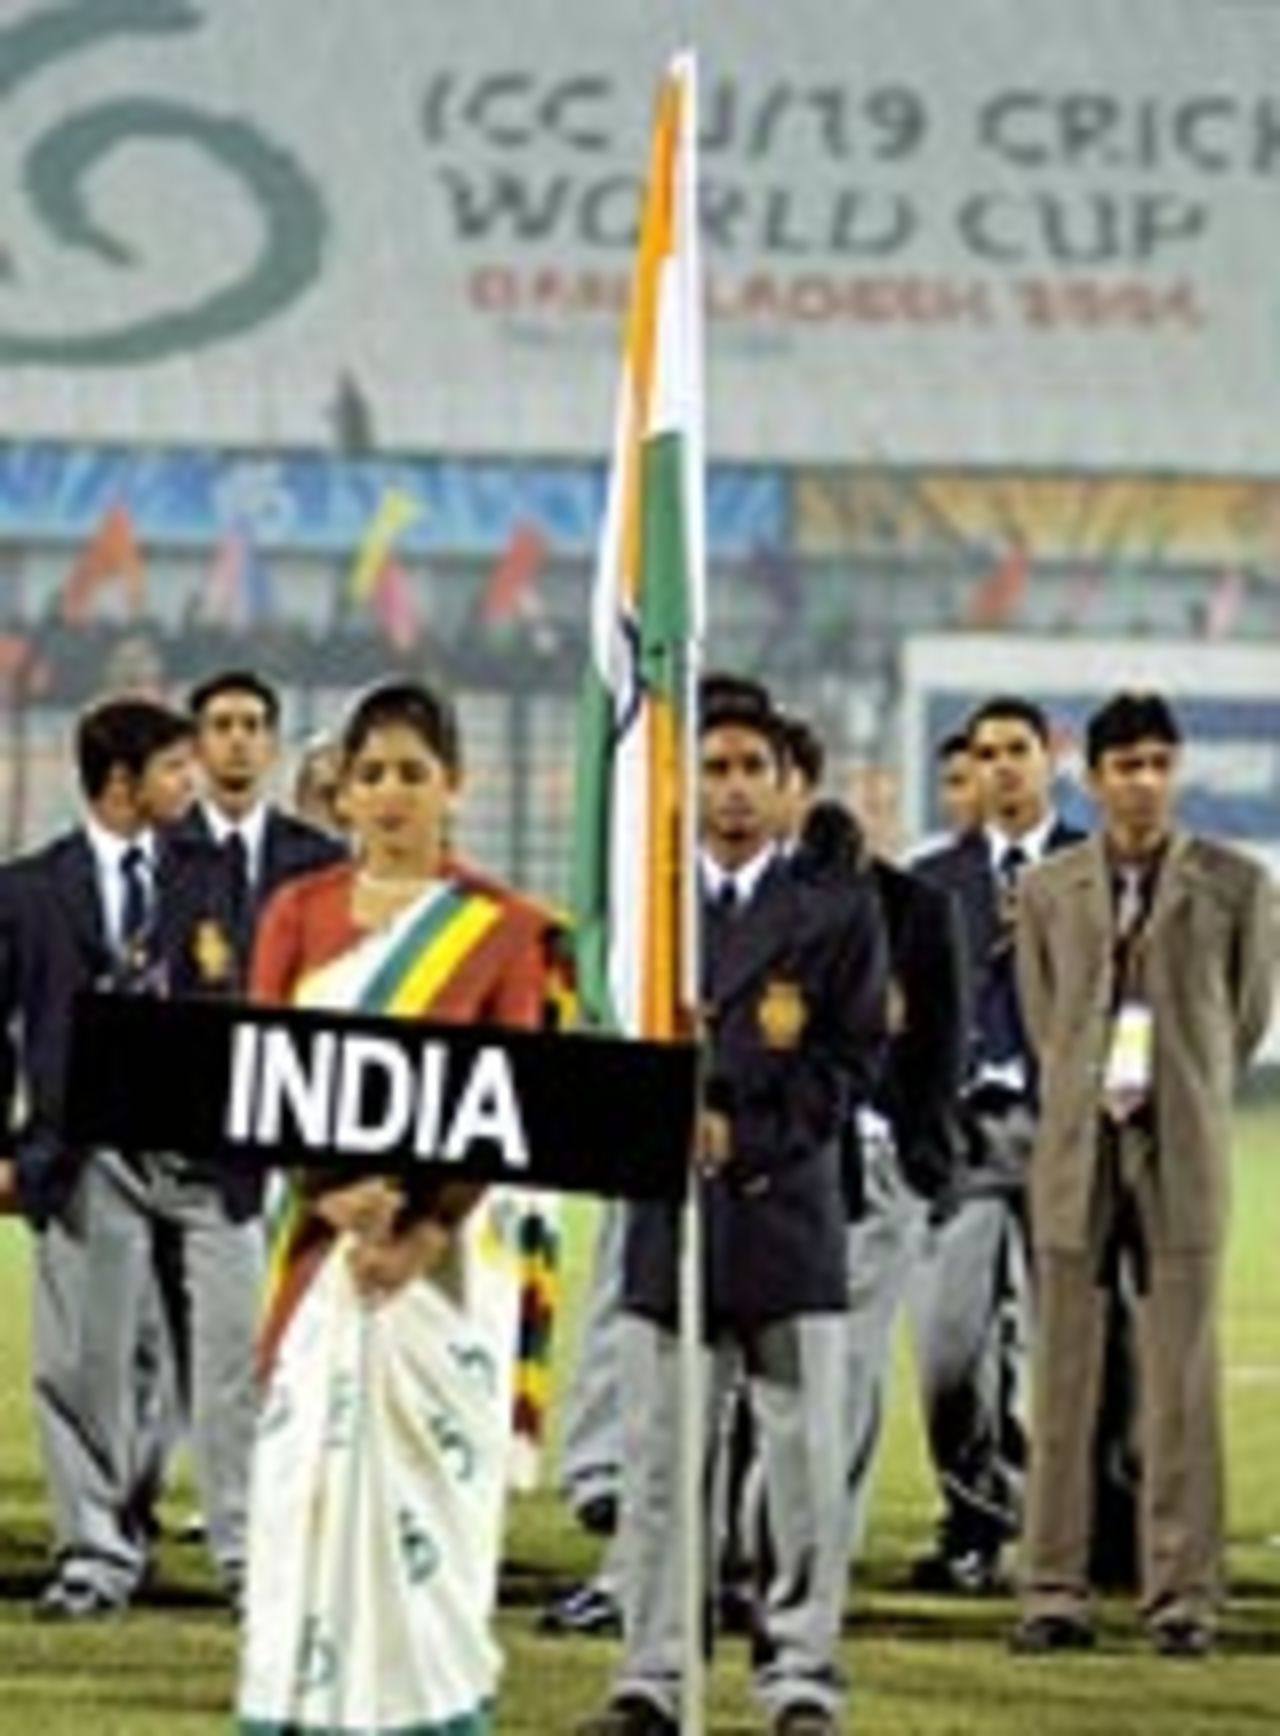 Under-19 World Cup opening ceremony, Dhaka, February 10, 2004